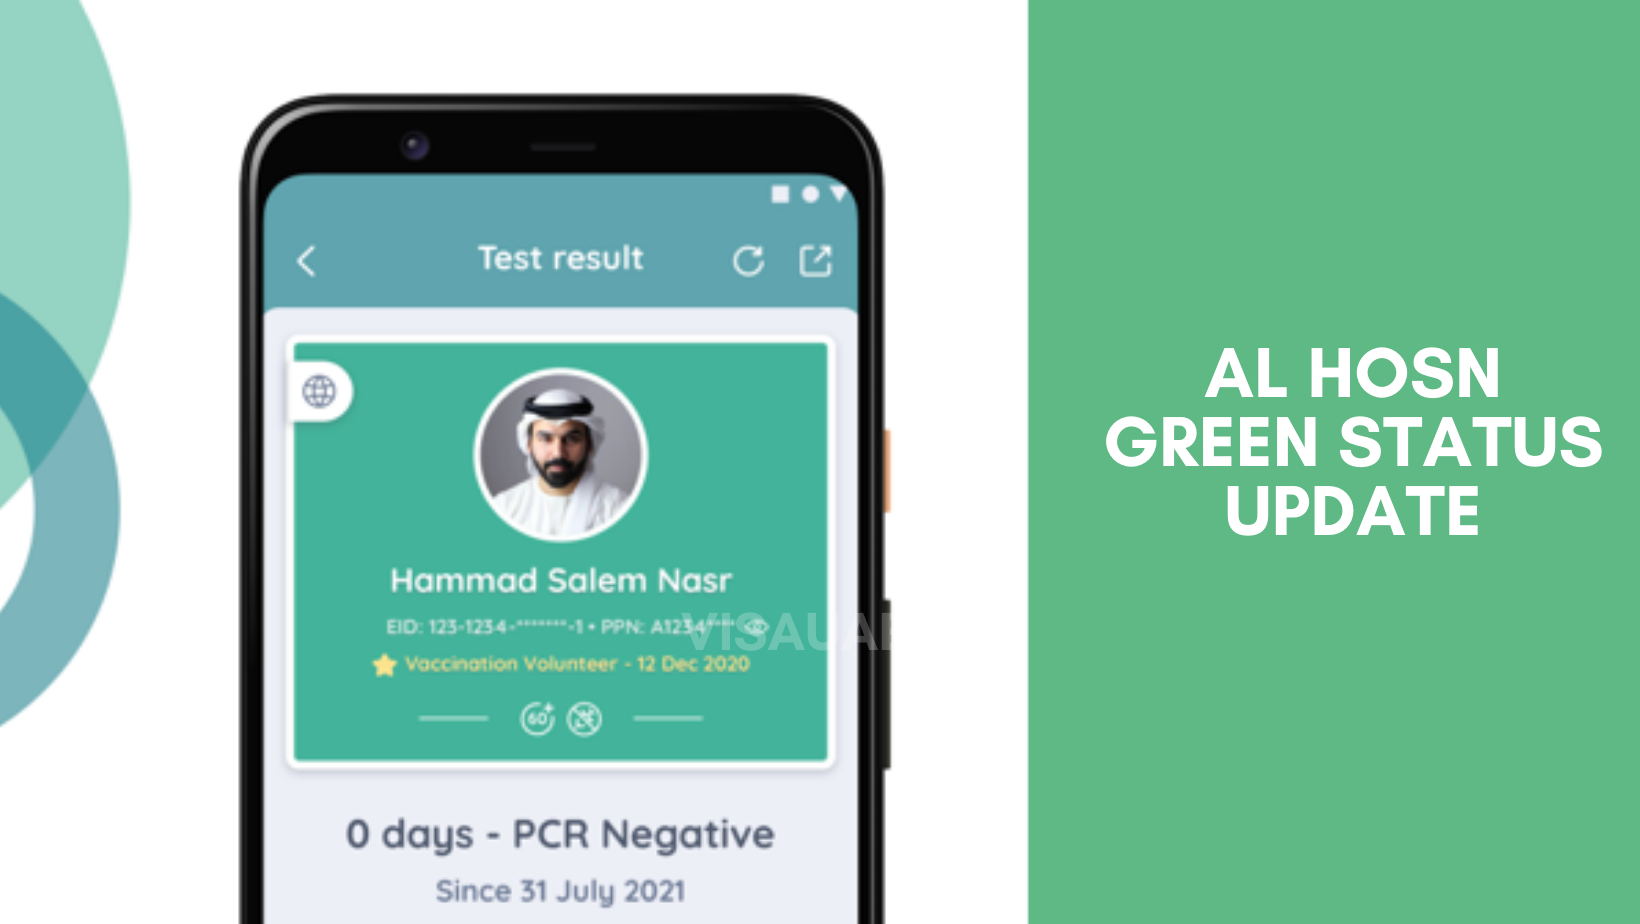 Al Hosn Green Status Update